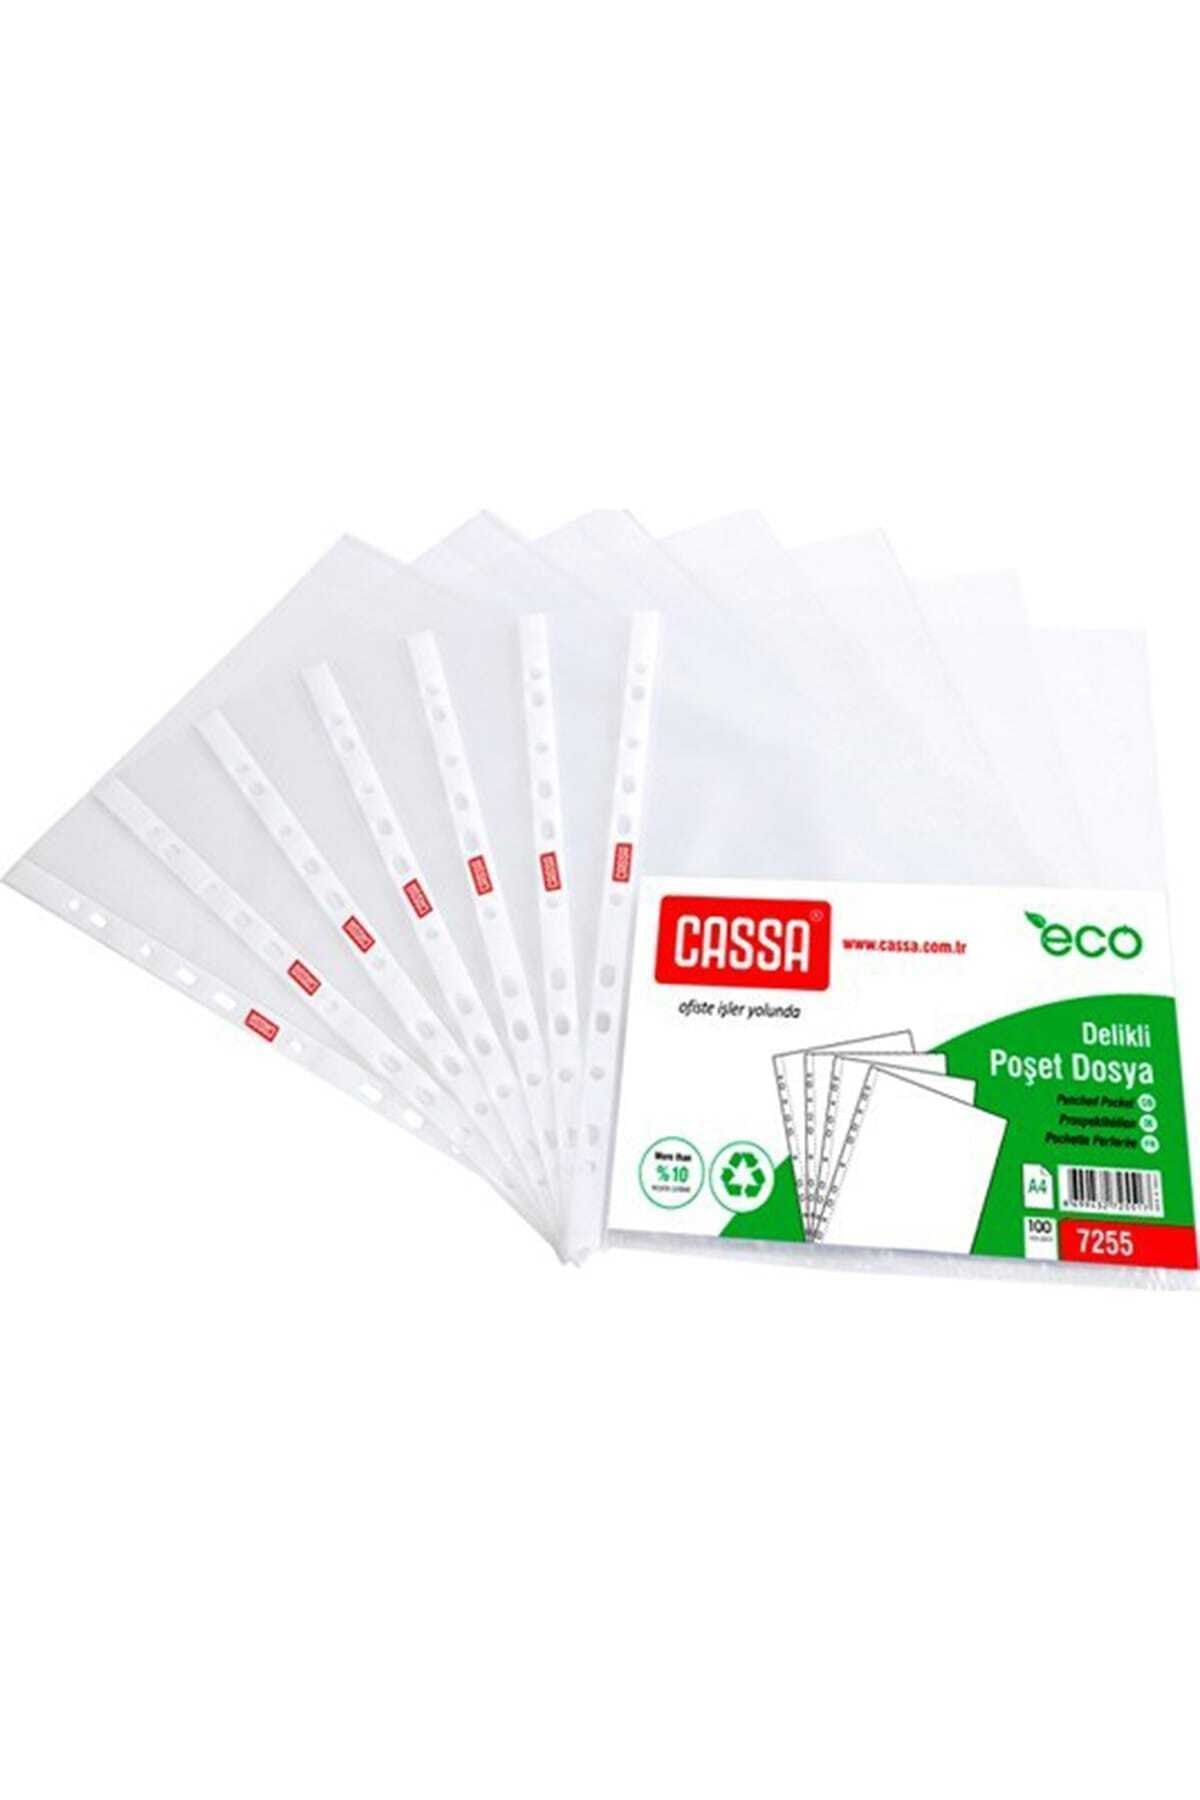 Cassa Eco Delikli Poşet Dosya 100'lü 7255